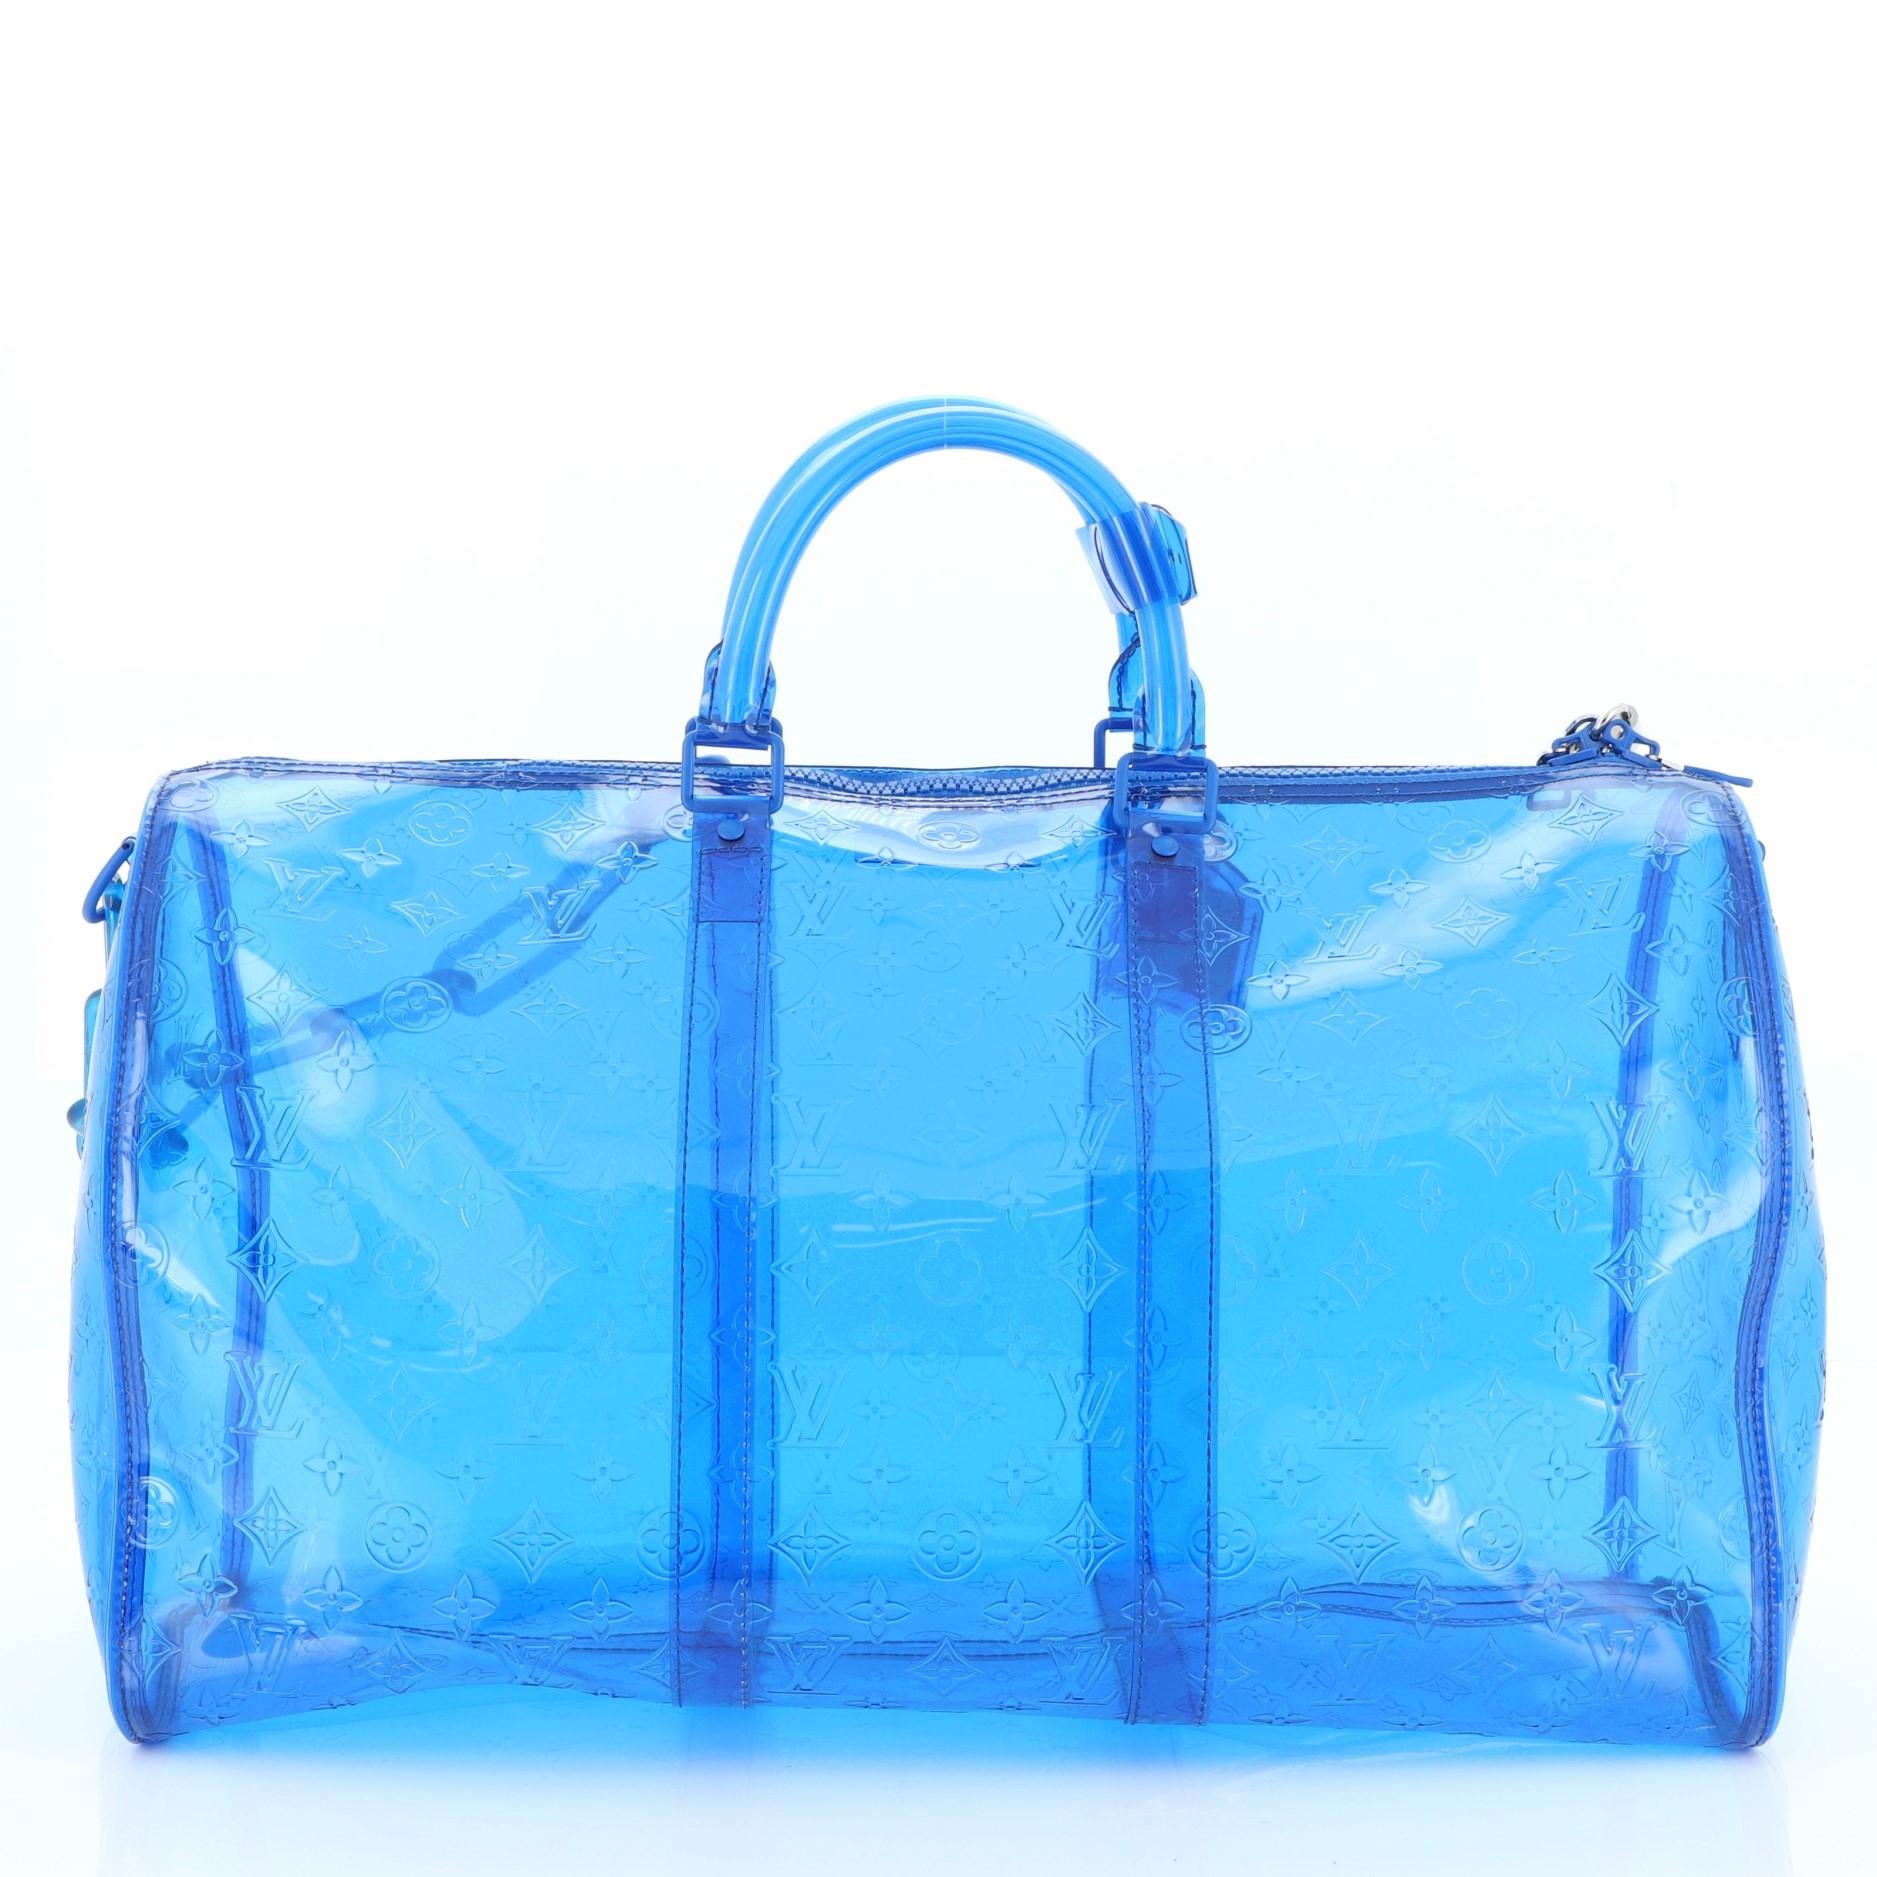 Blue Louis Vuitton Keepall Bandouliere Bag Limited Edition Monogram PVC 50